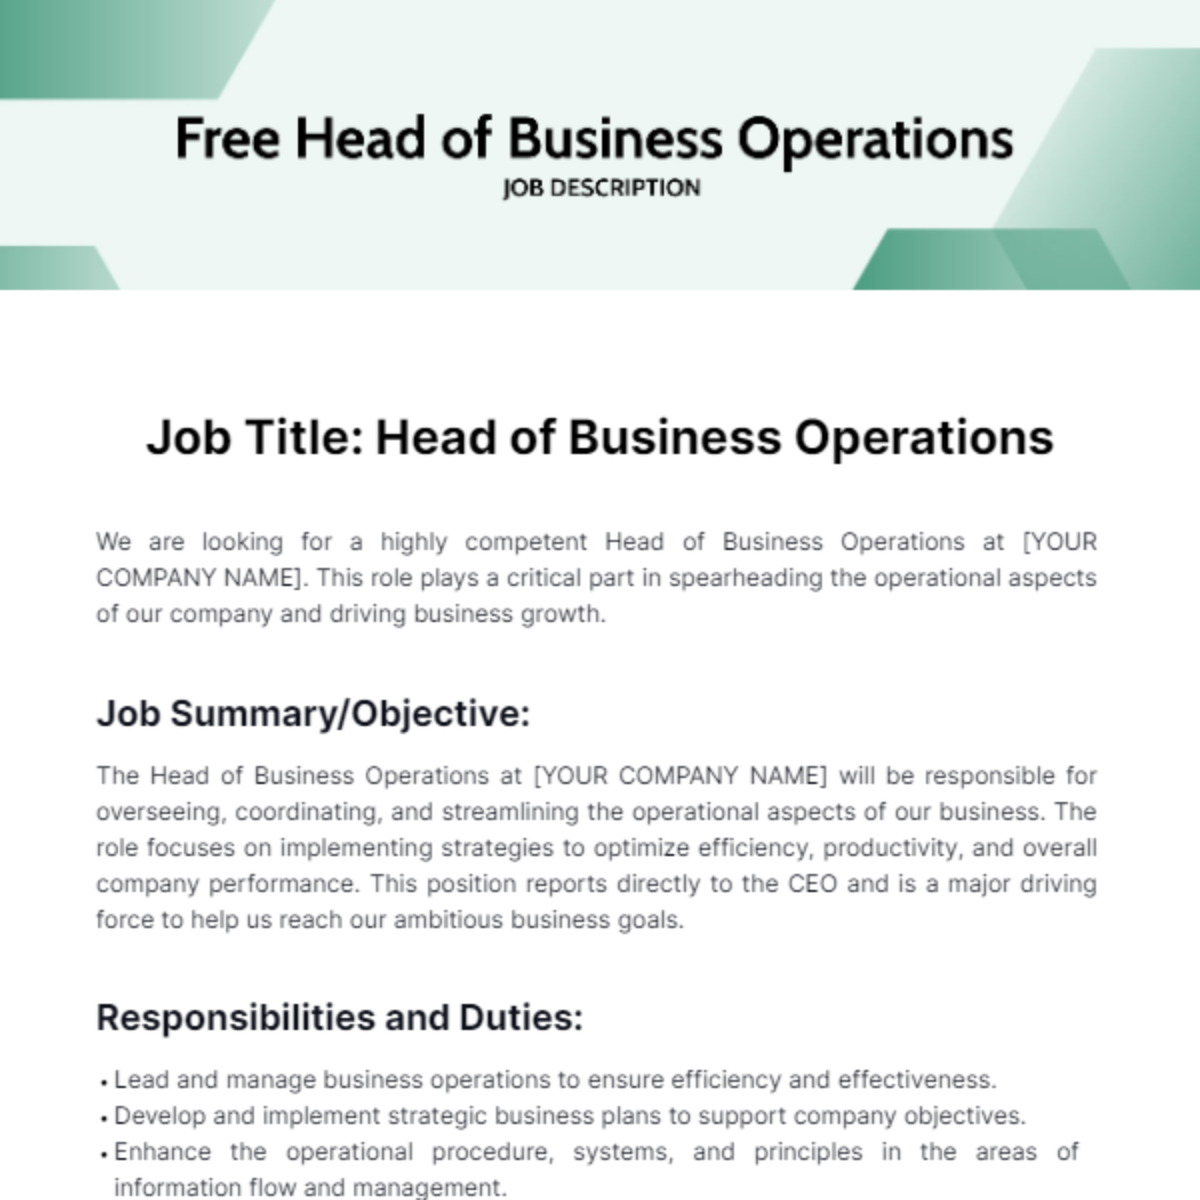 Head of Business Operations Job Description Template